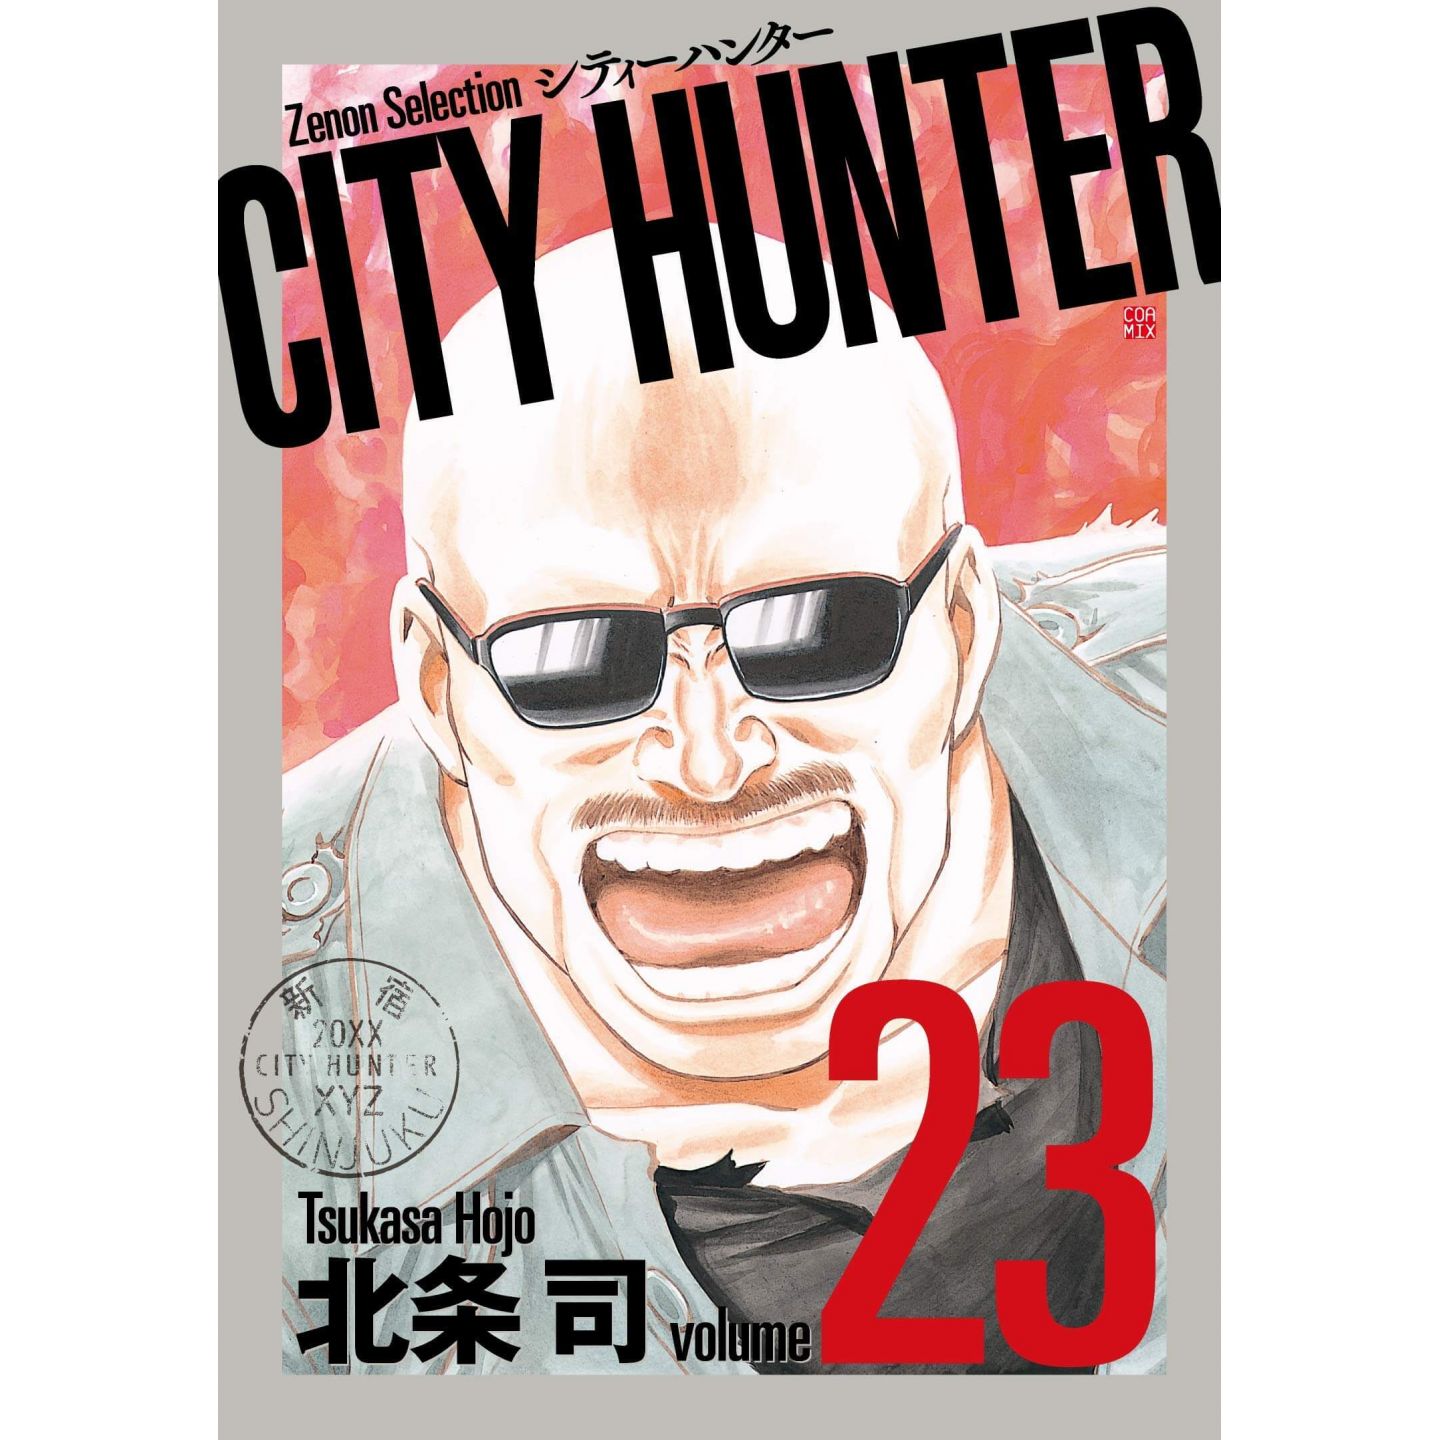 City Hunter Vol 23 Zenon Selection Japanese Version